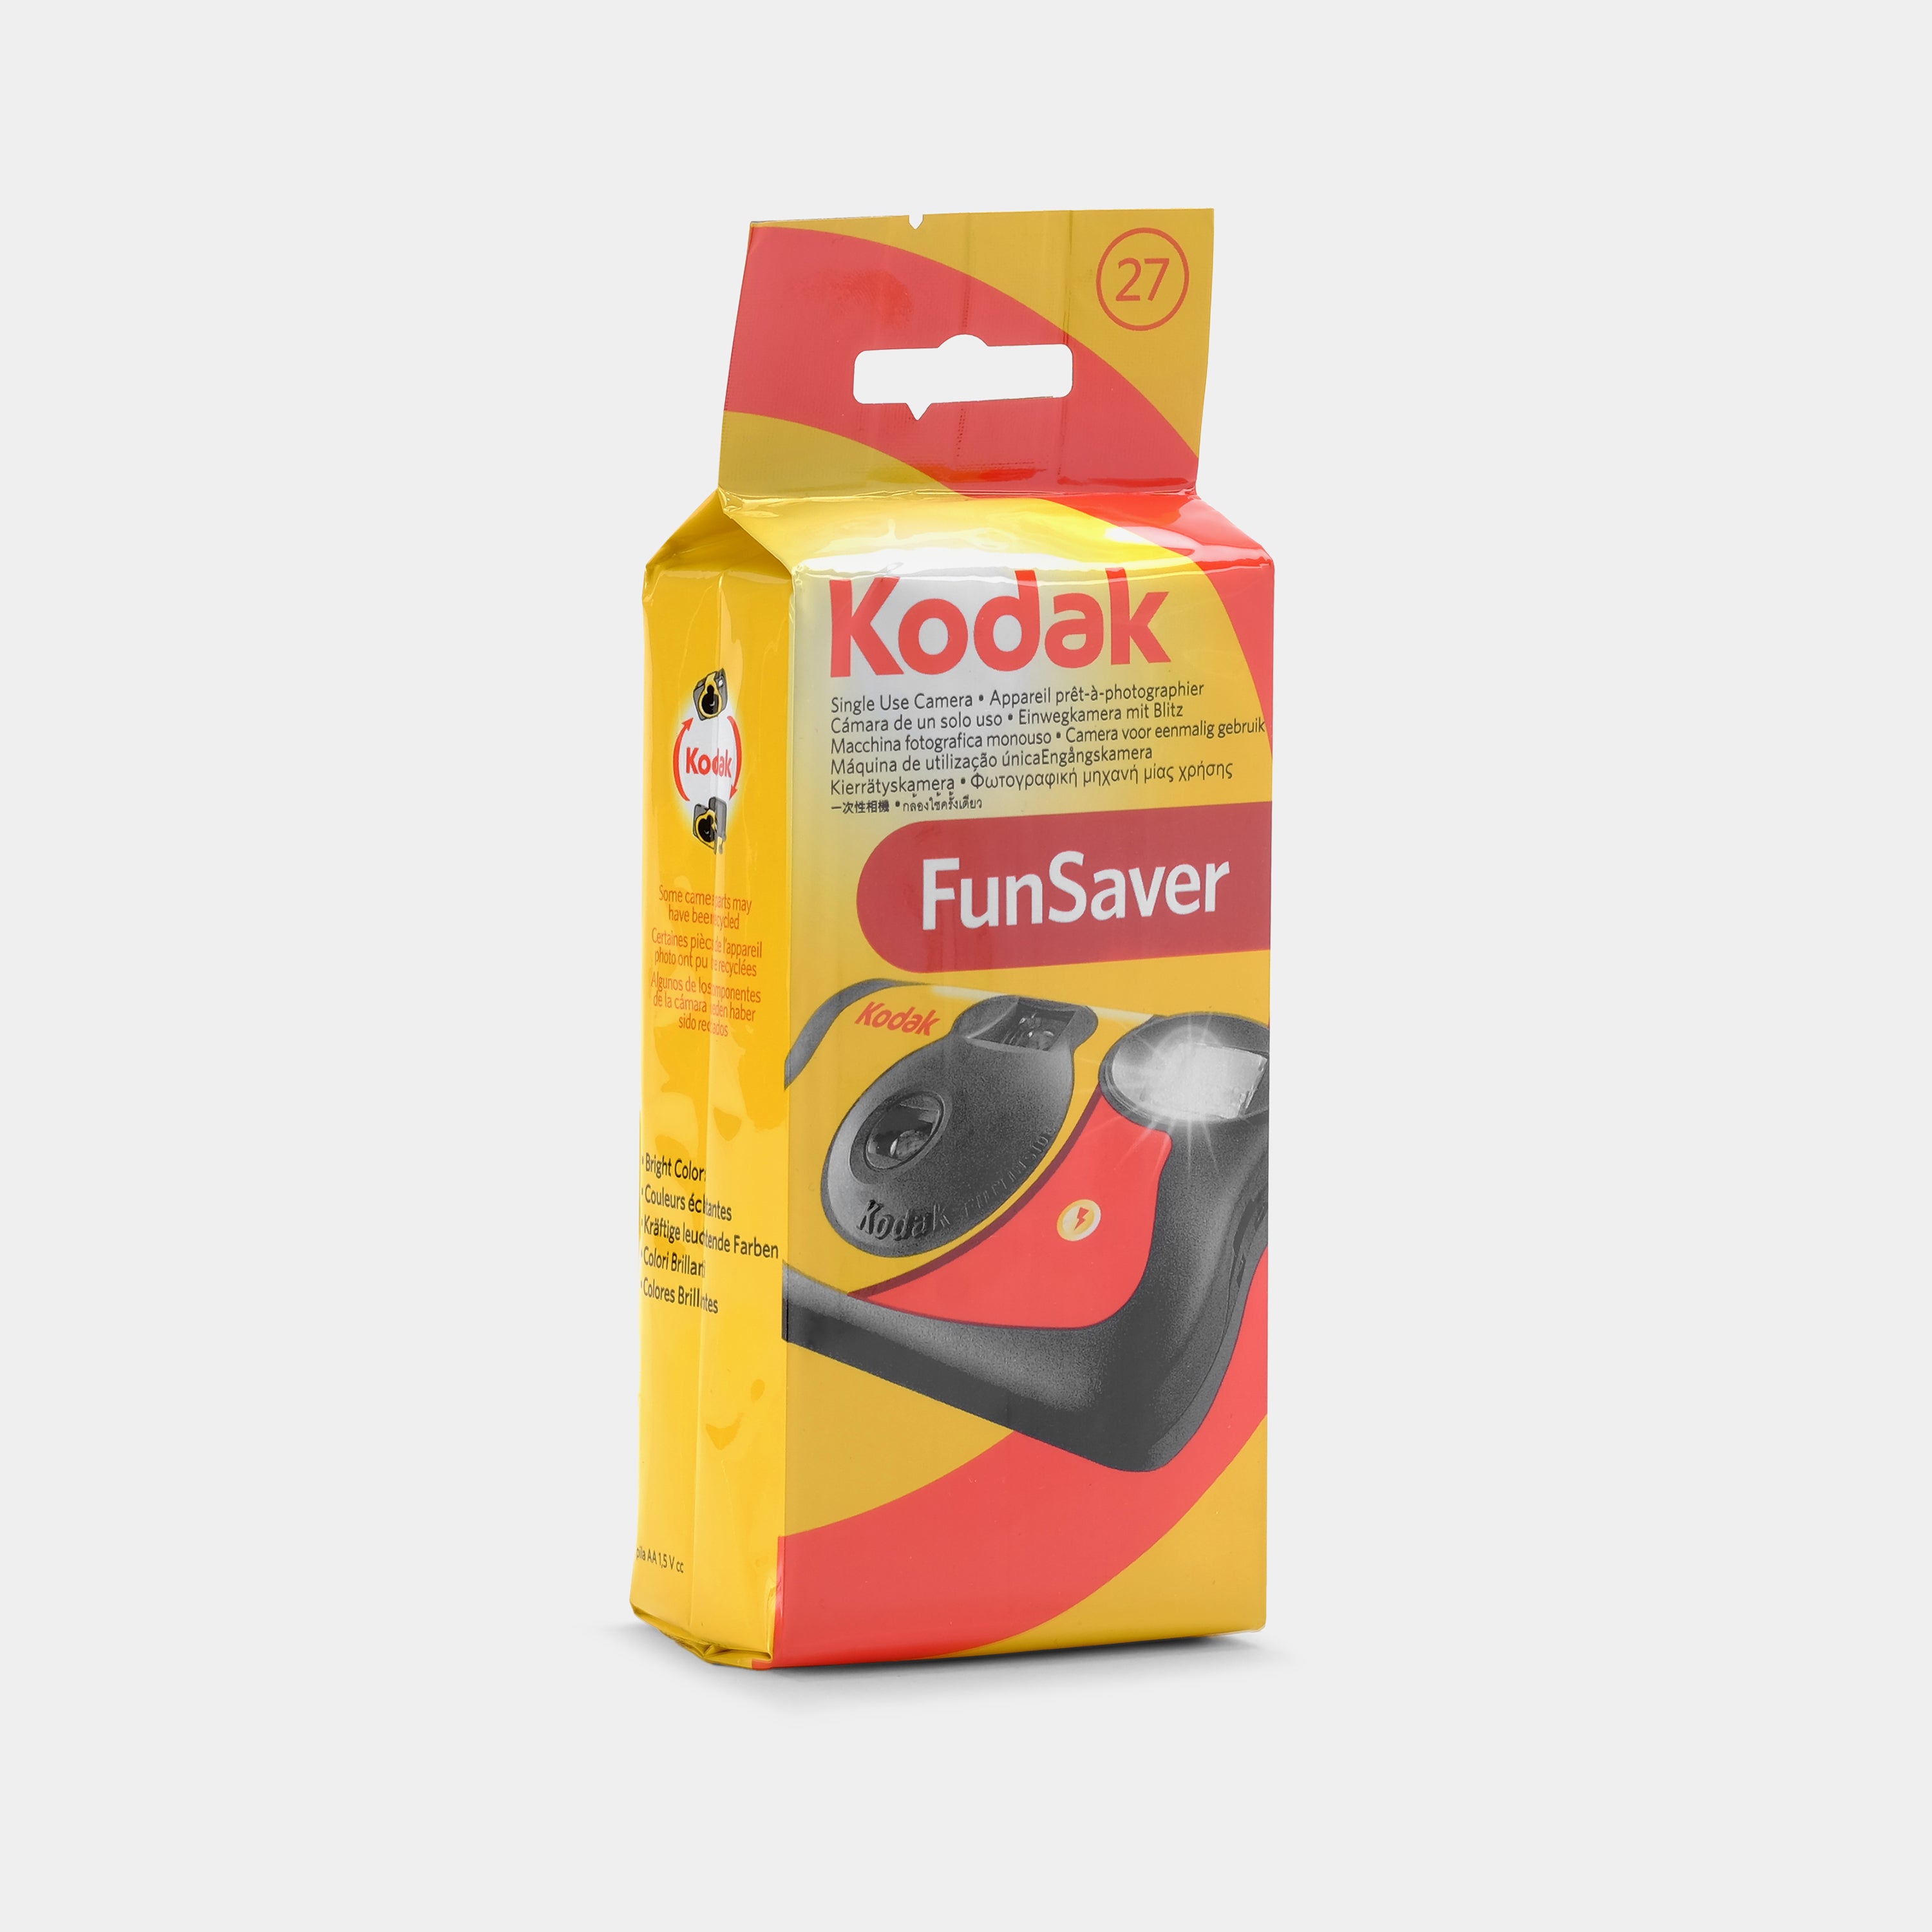 Kodak FunSaver Disposable 35mm Film Camera (27 Exposures)